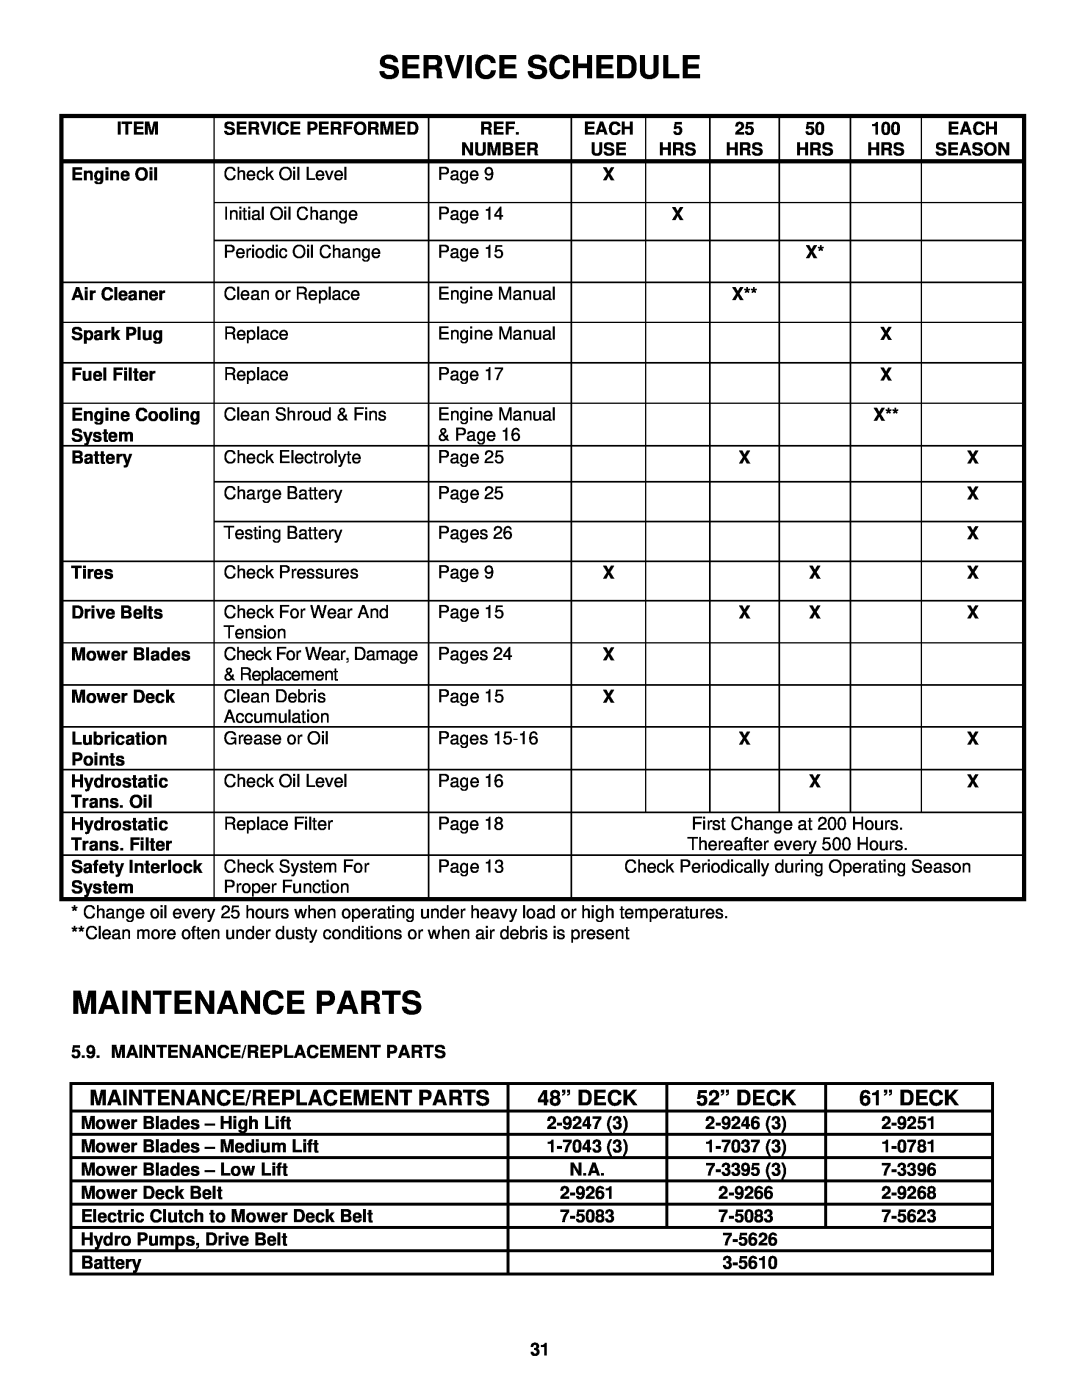 Snapper NZMJ23521KH, NZMJ25611KH Service Schedule, Maintenance Parts, Maintenance/Replacement Parts, 48” DECK, 52” DECK 